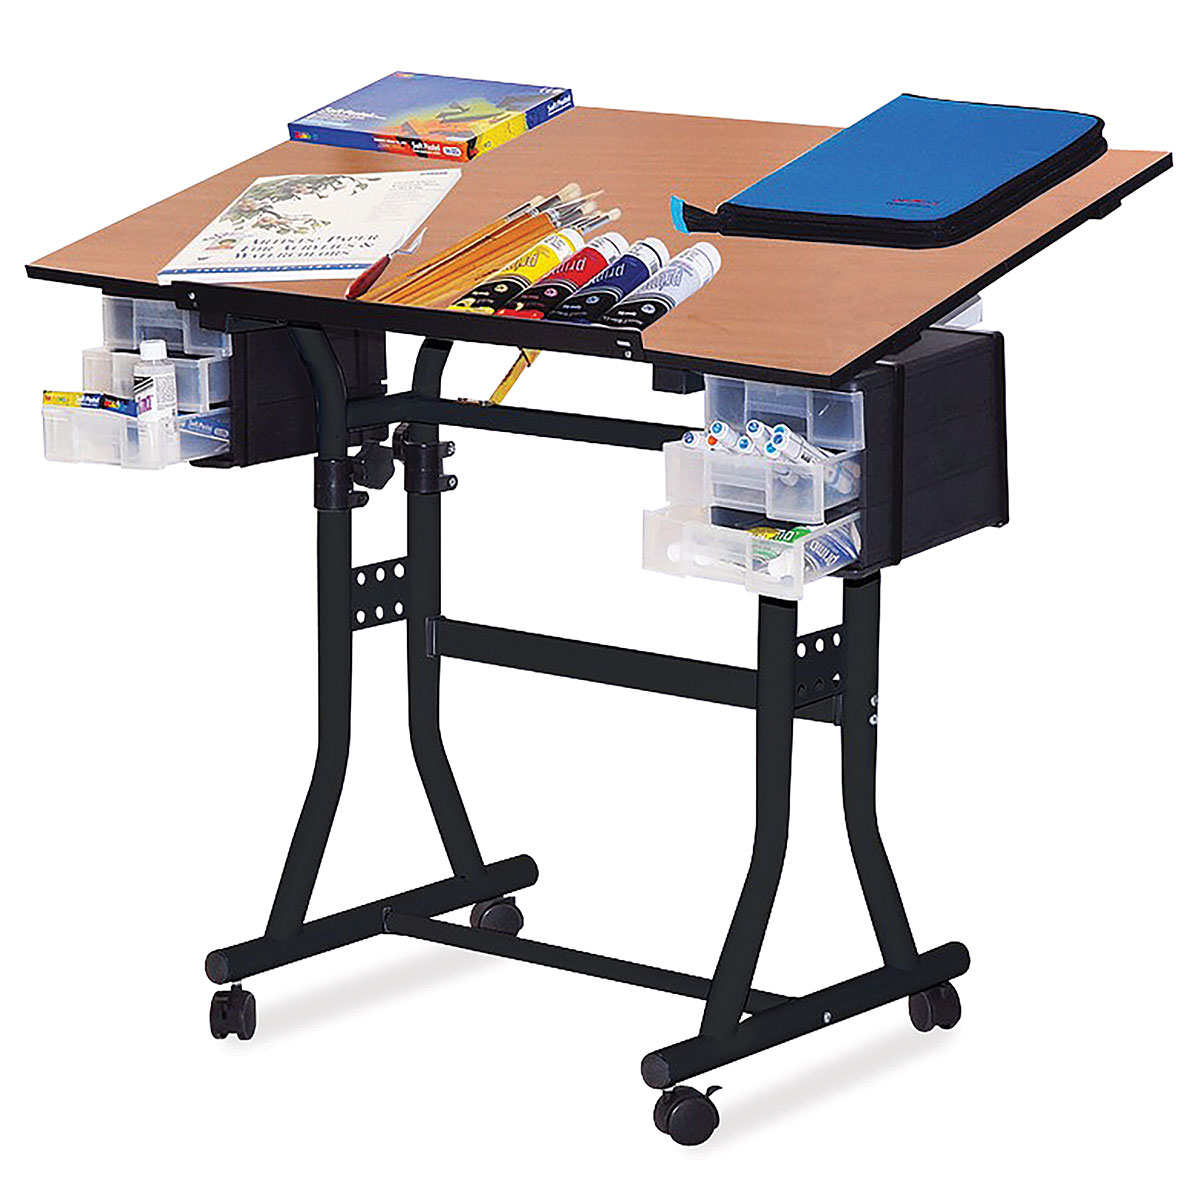 martin portable drafting tabel $100  Art studio room, Office craft space,  Art desk